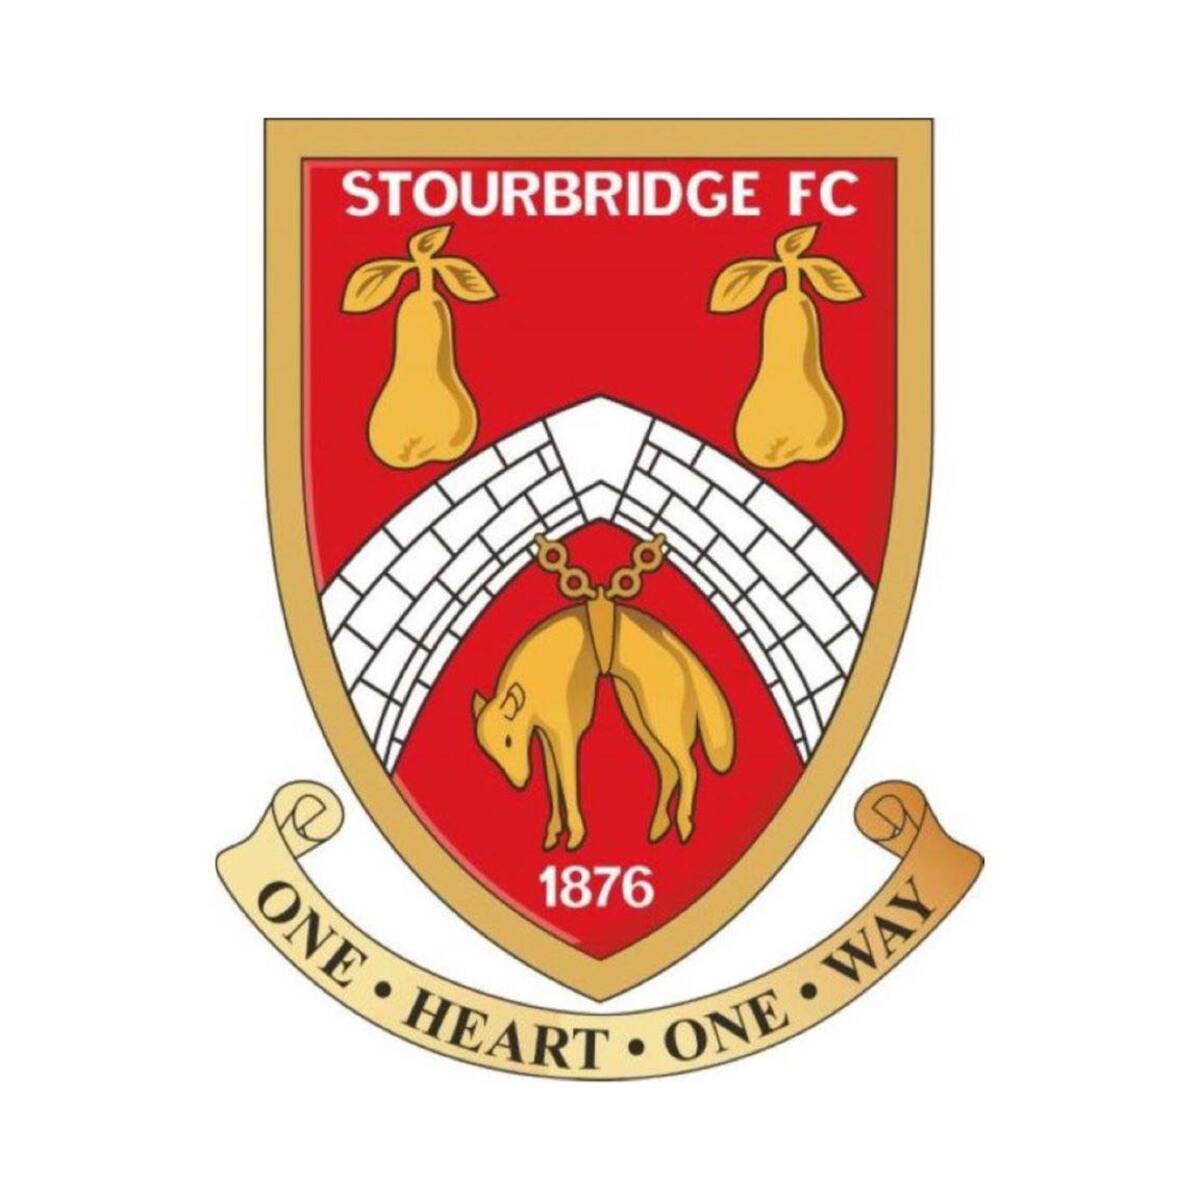 Stourbridge FC: 21 Football Club Facts - Facts.net